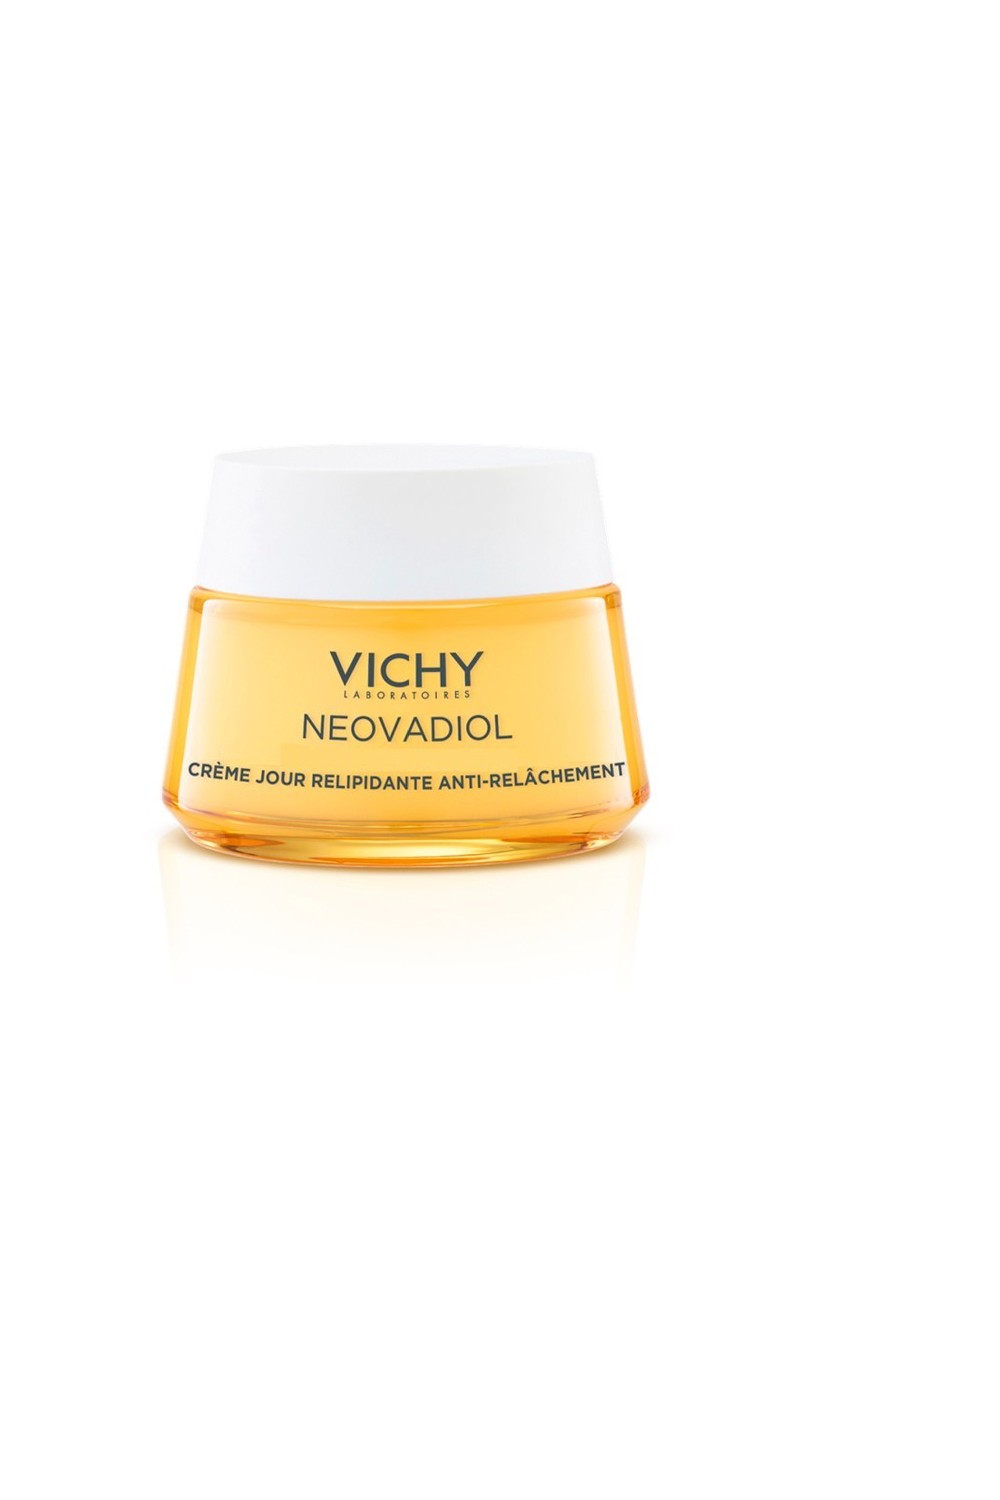 Vichy Neovadiol Nourishing Anti-Sagging Post-Menopause Day Cream 50ml